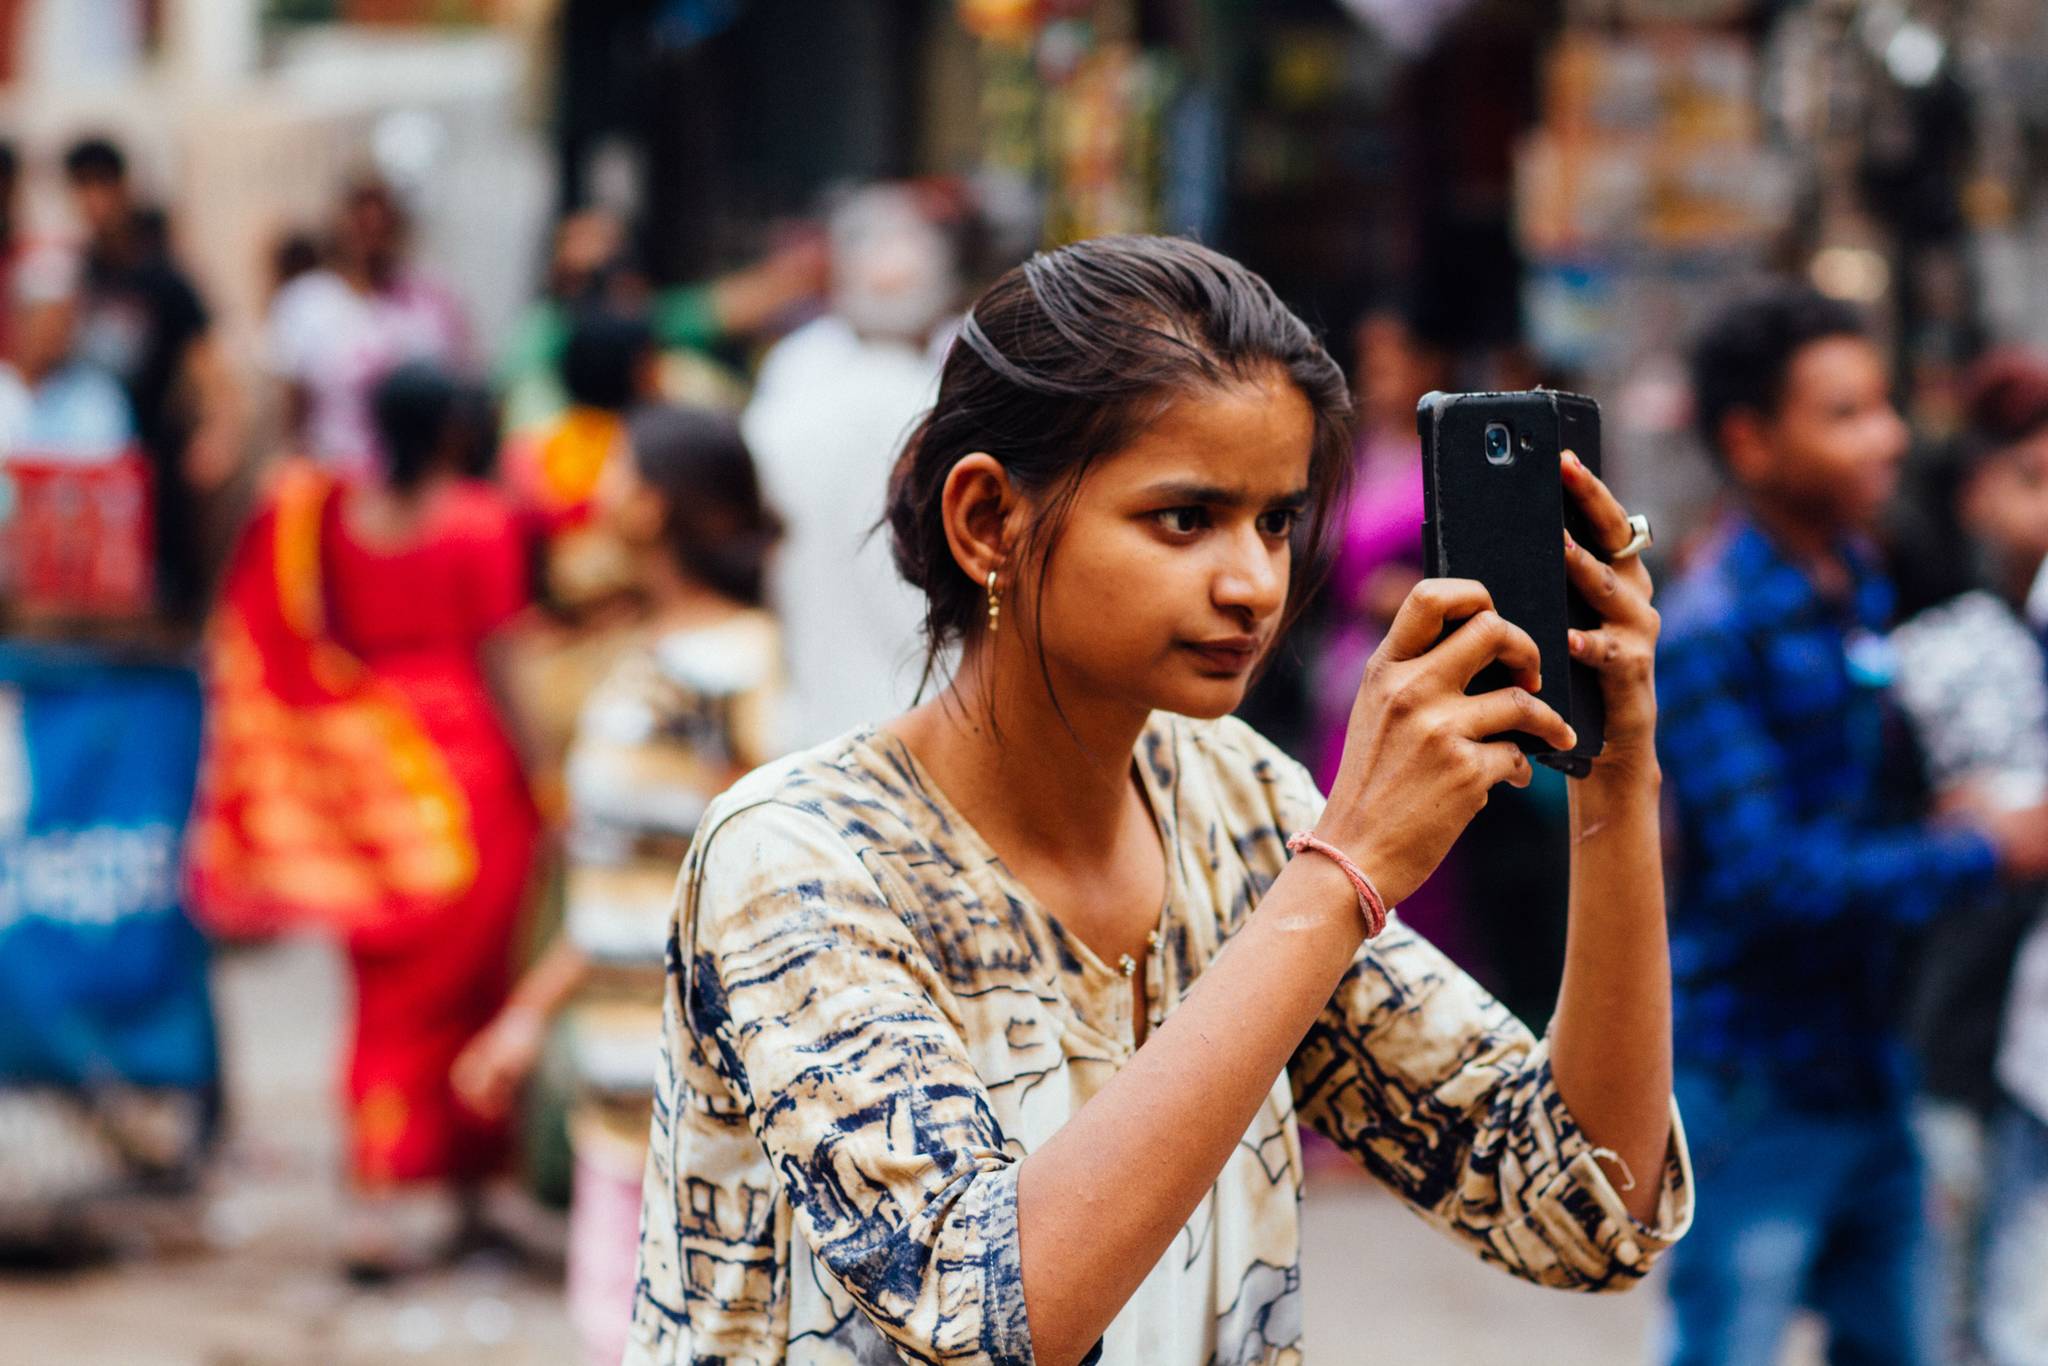 WhatsApp: mobile Indians embrace dark social sharing